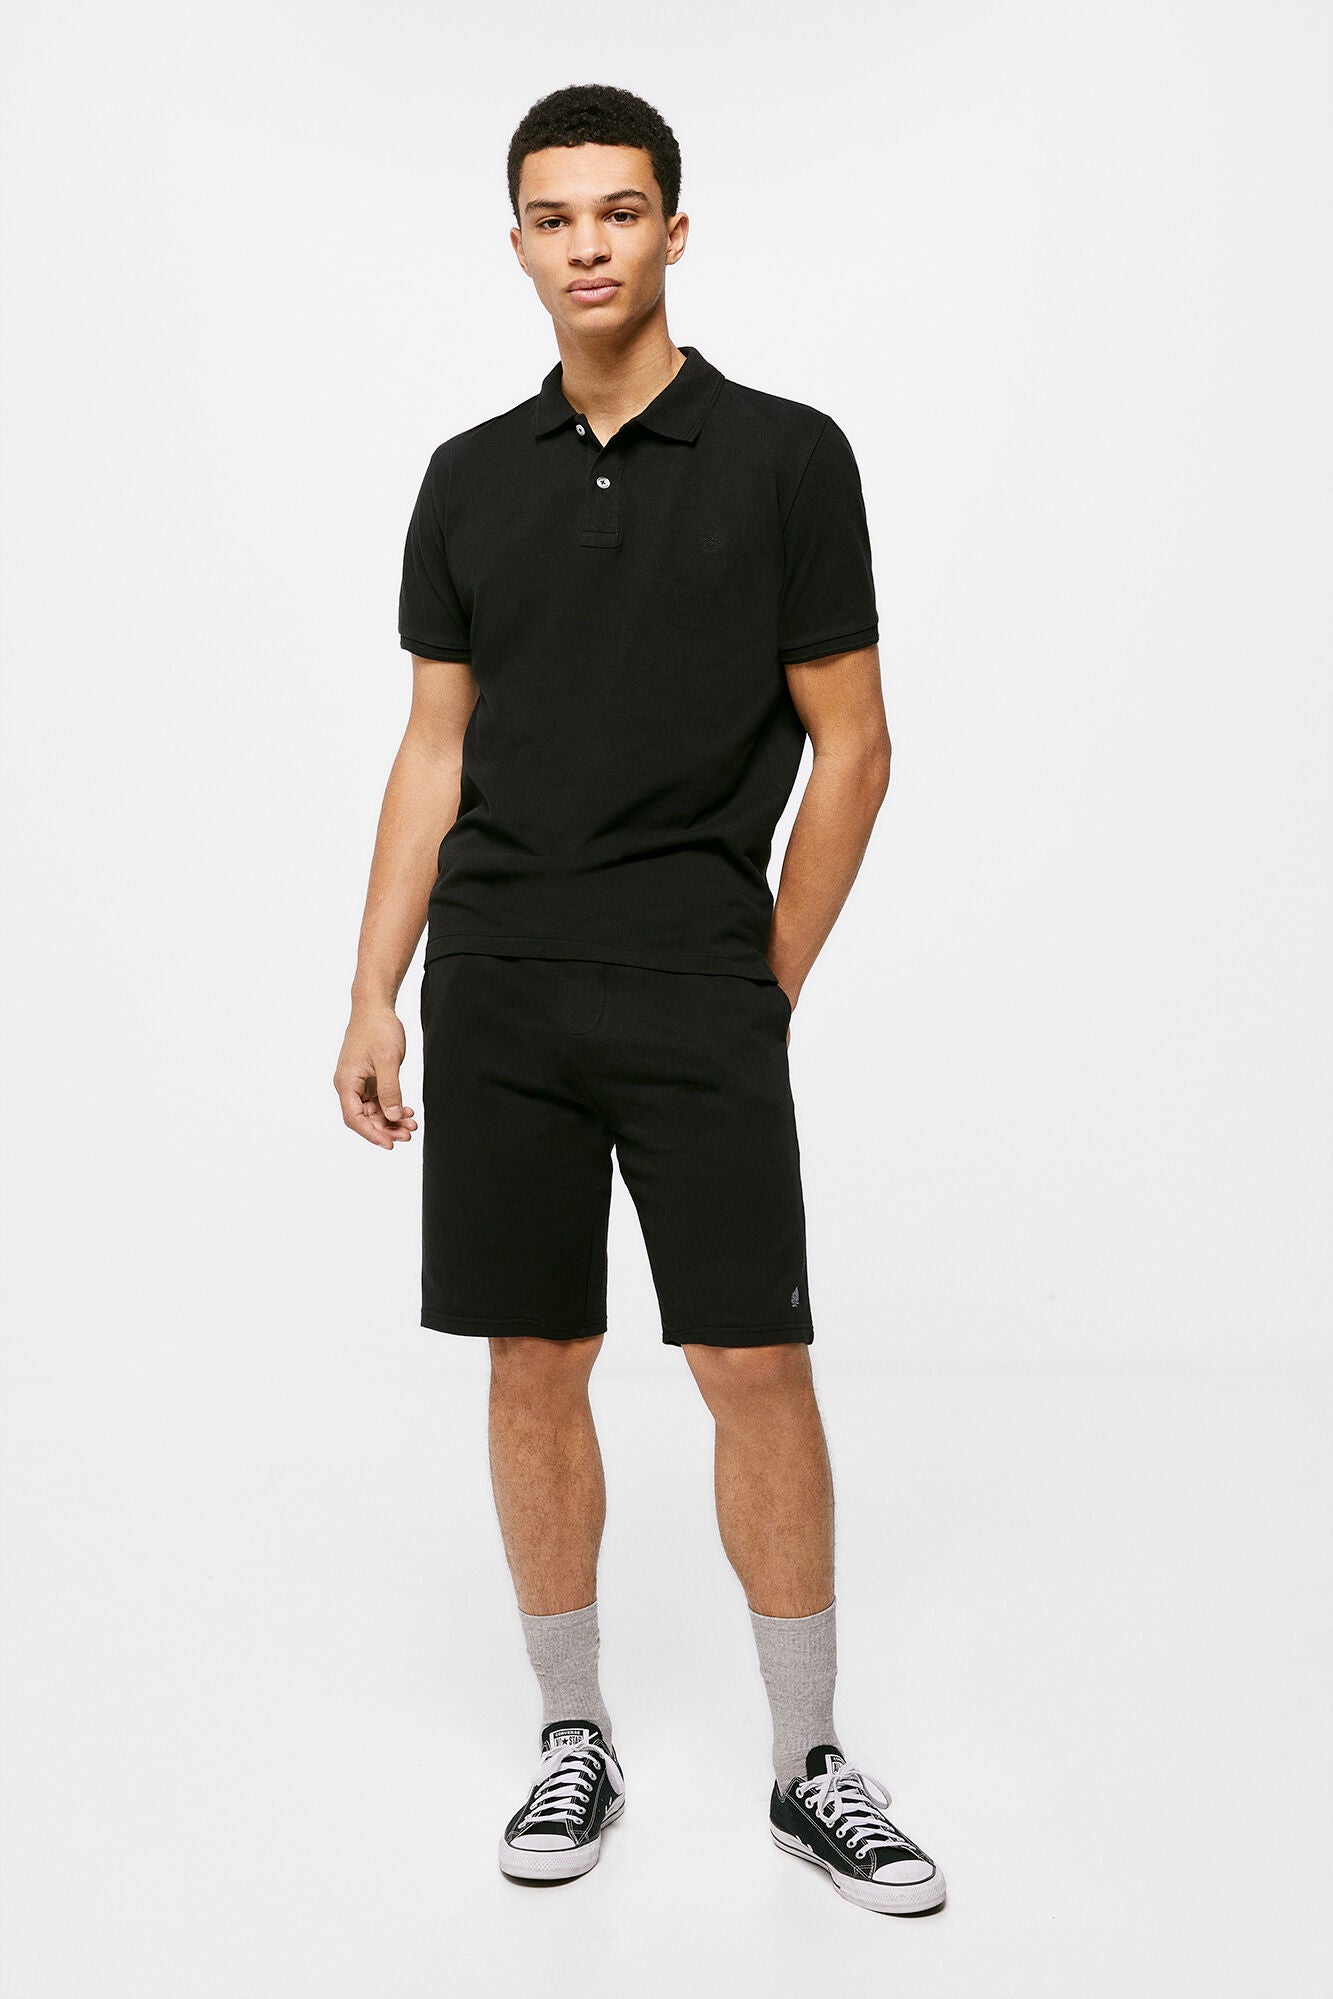 Black Pocket Bermuda Shorts